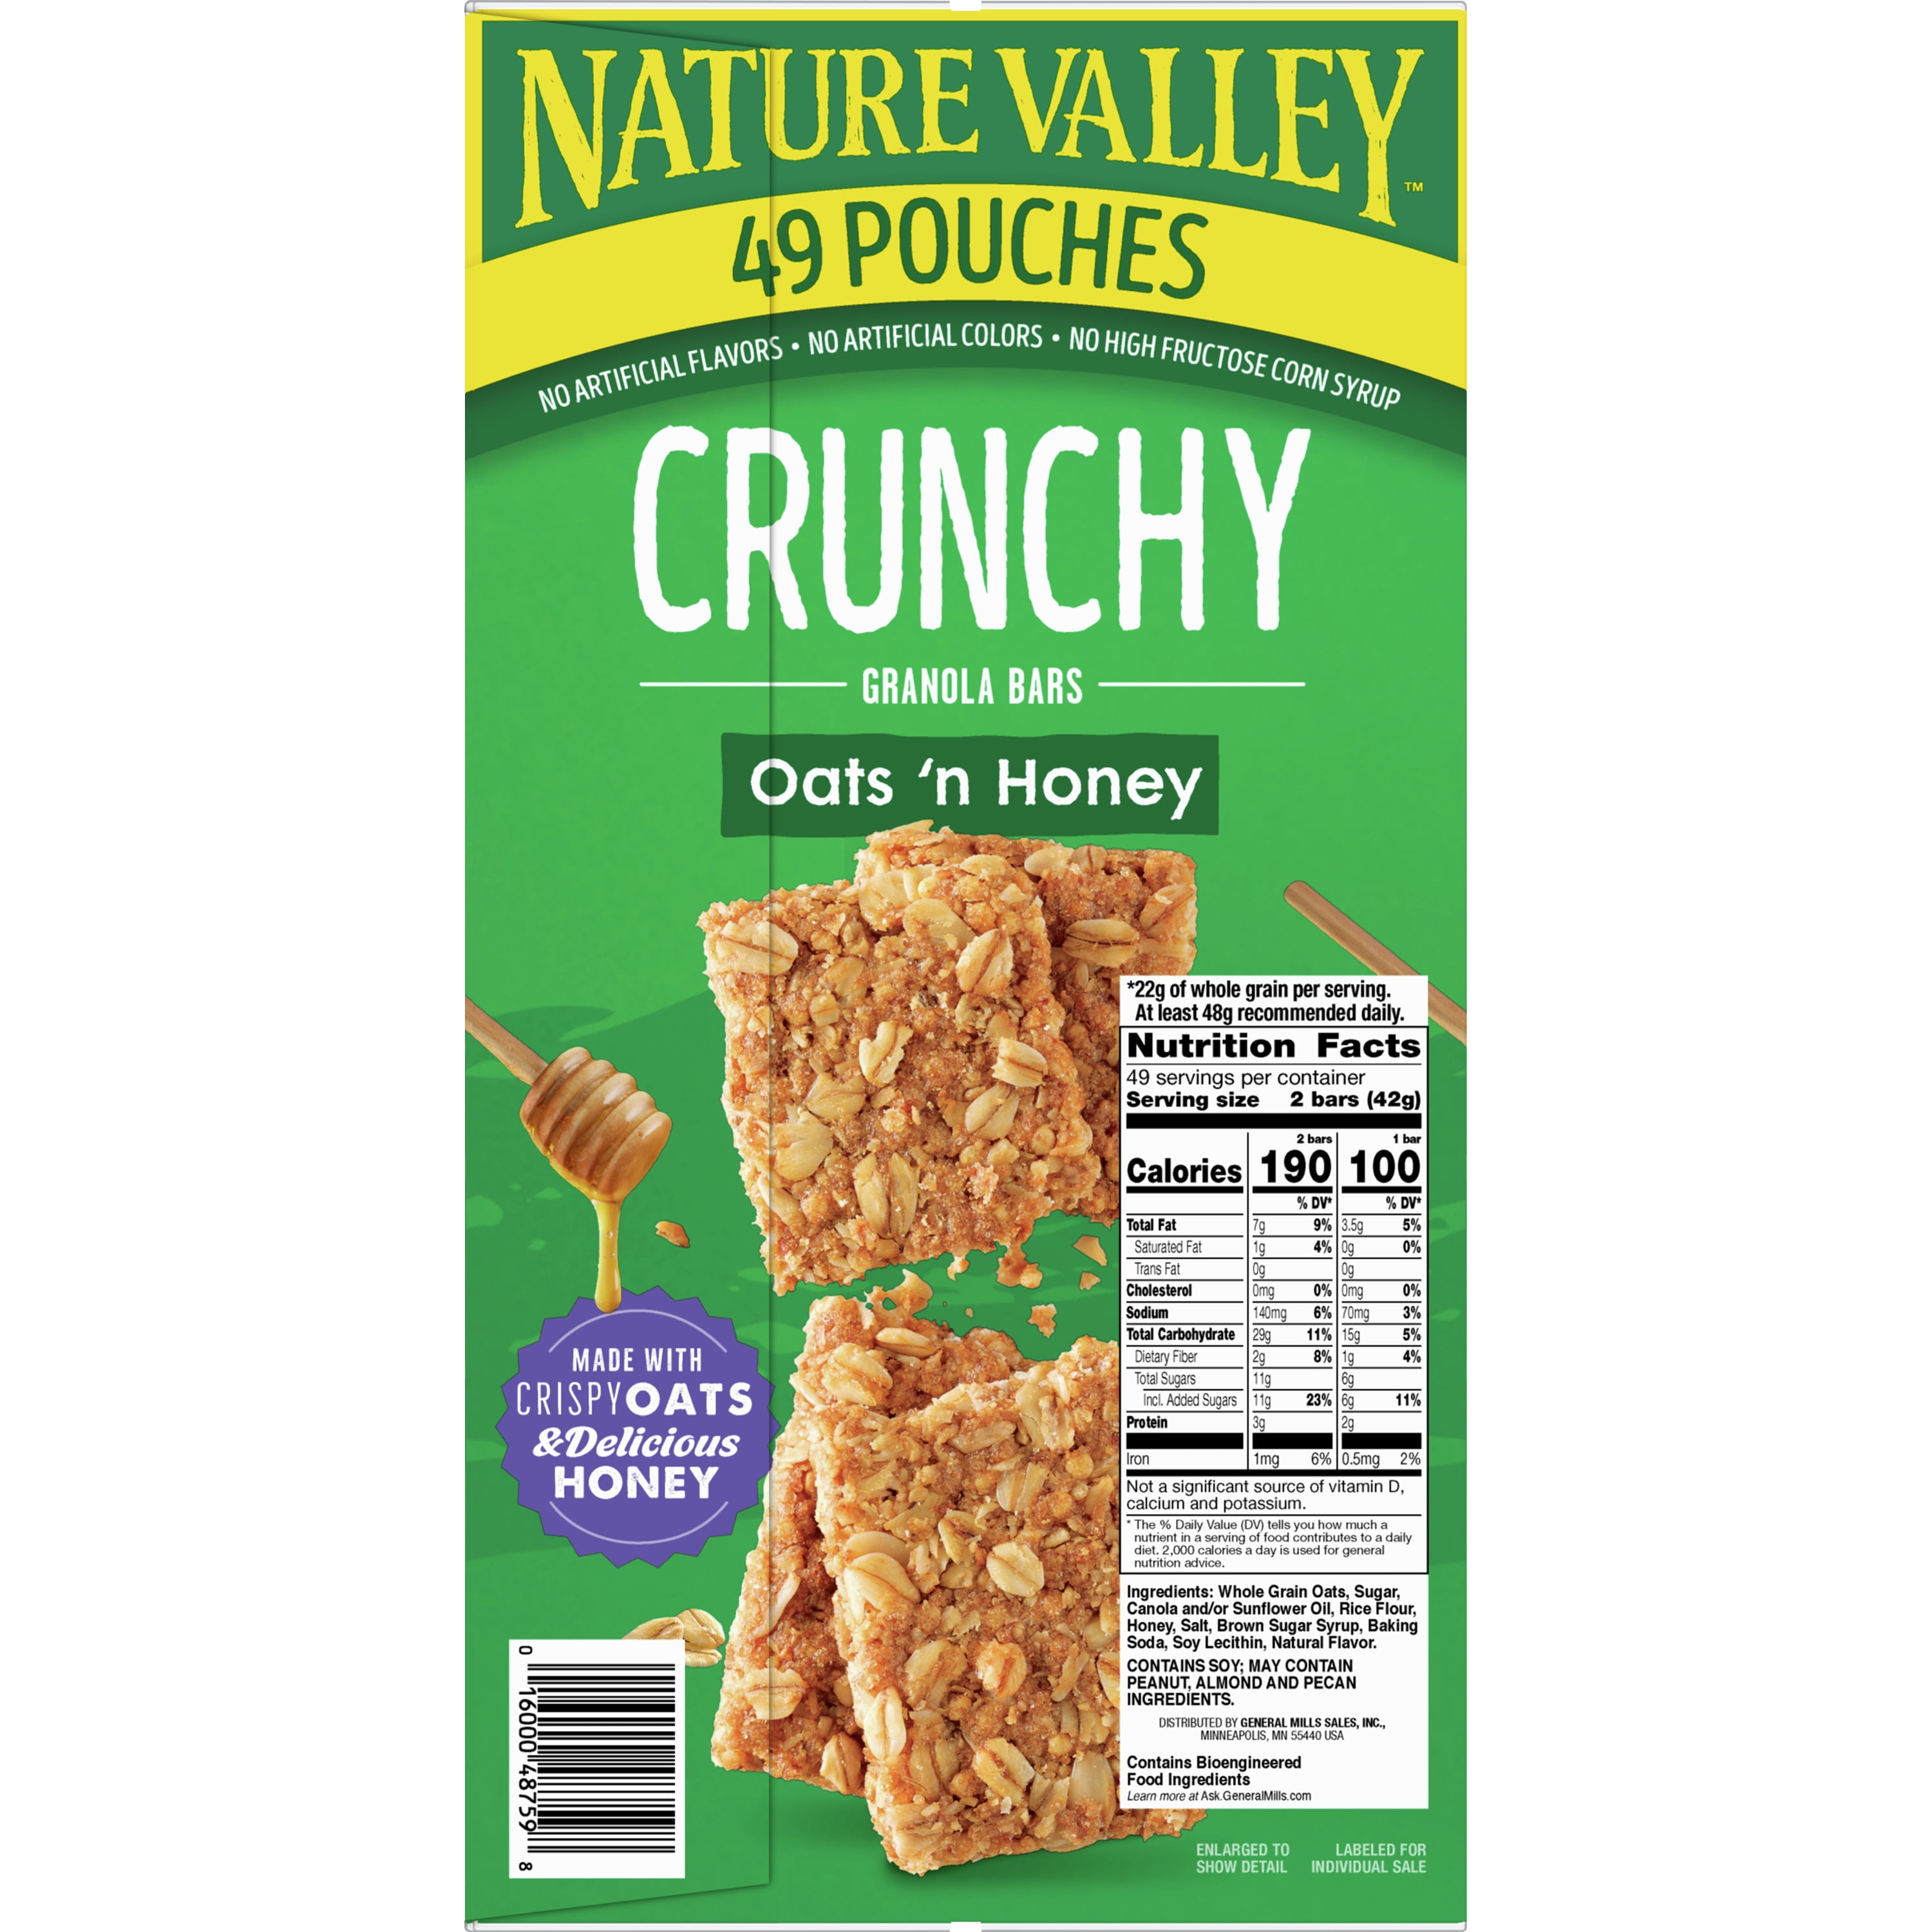 Nature Valley Crunchy Granola Bars, Oats 'n Honey, 49 ct, 98 bars -  